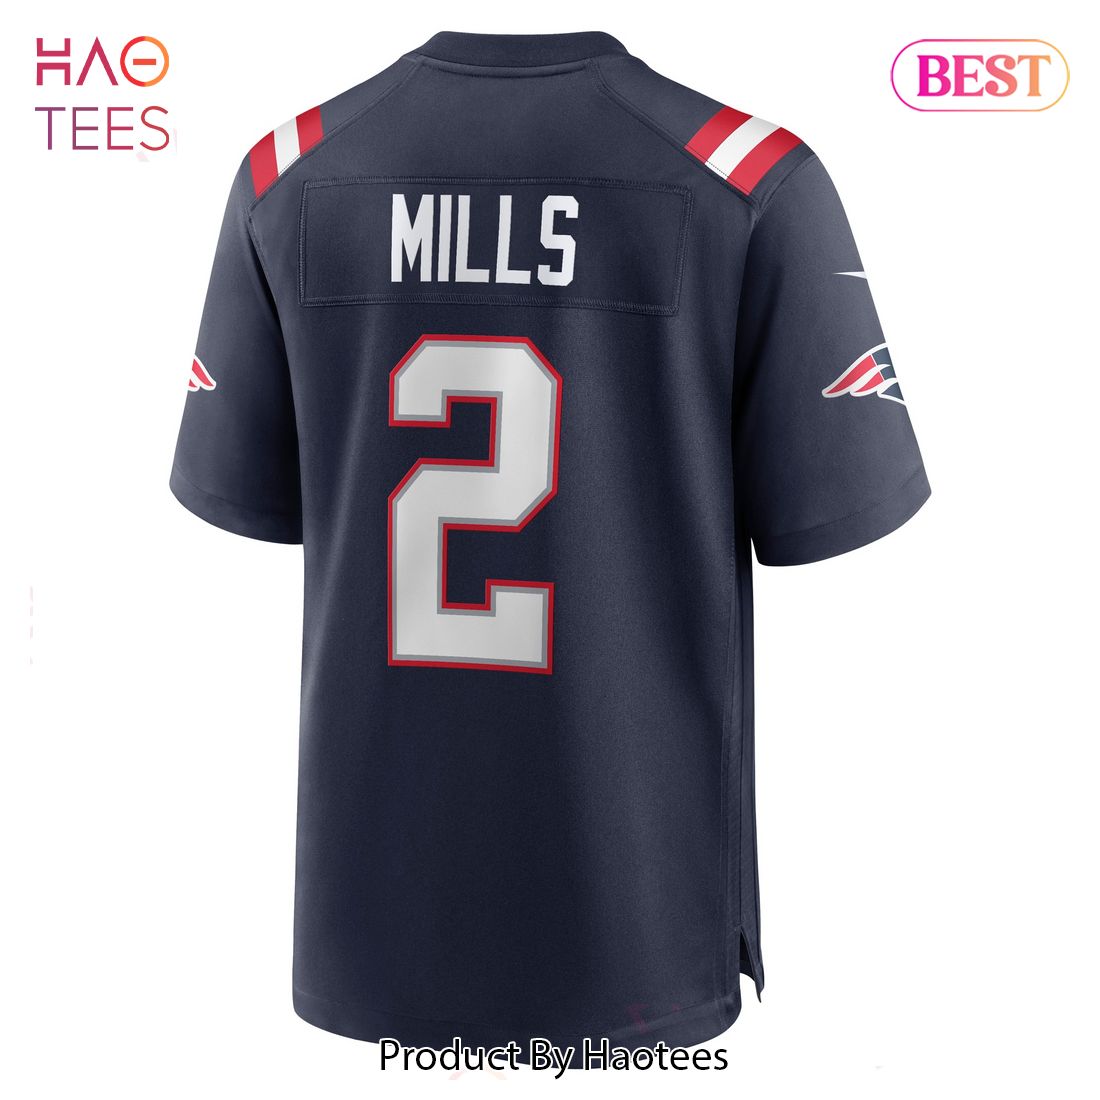 Jalen Mills New England Patriots Nike Game Player Jersey Navy